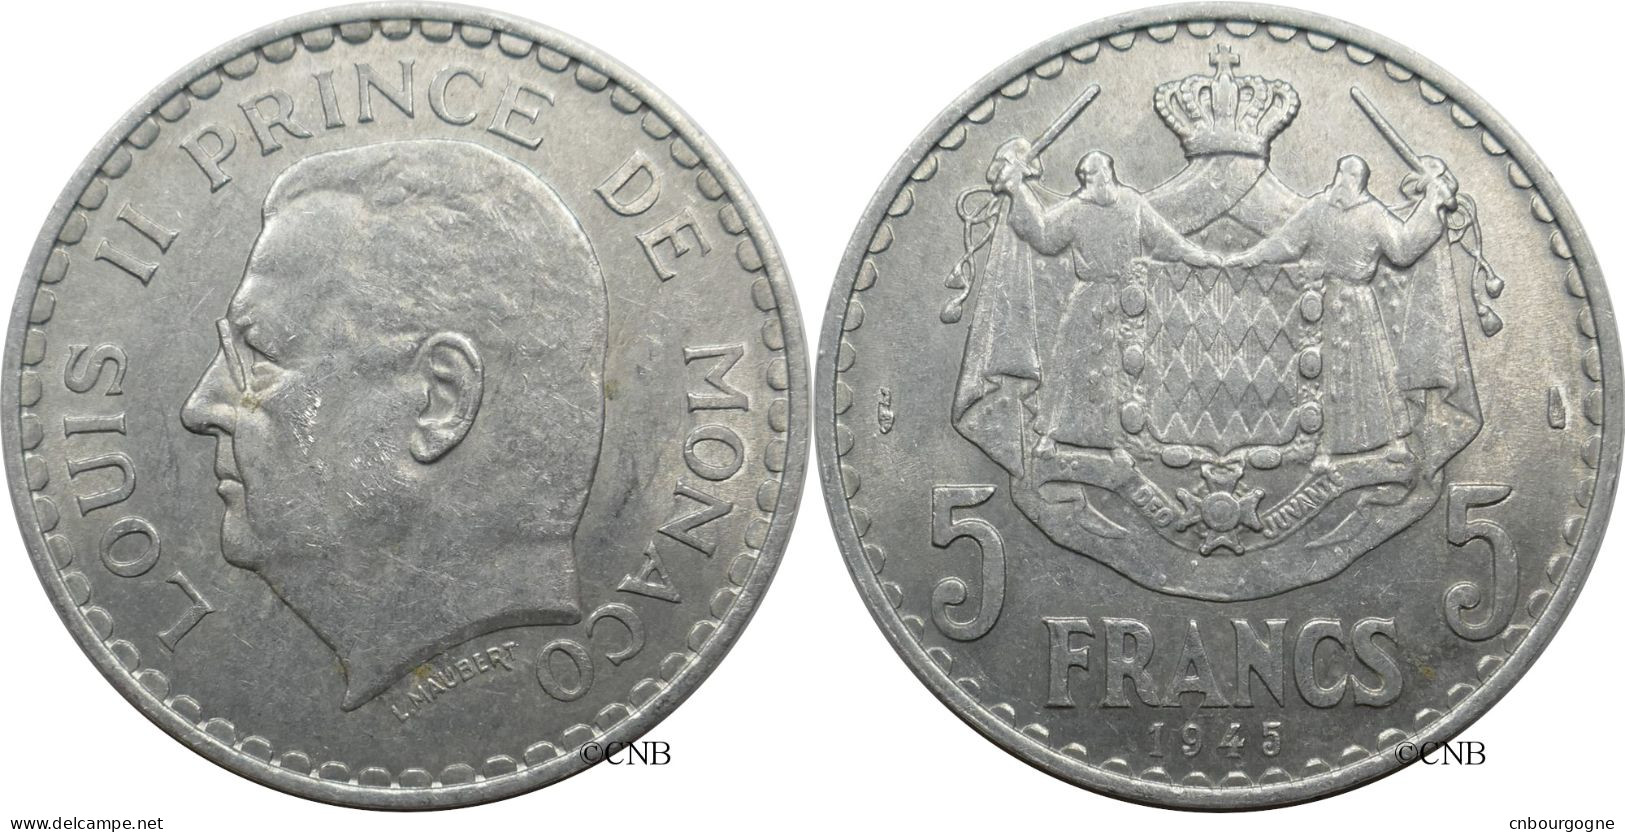 Monaco - Principauté - Louis II - 5 Francs 1945 - SUP/AU55 - Mon6136 - 1922-1949 Luigi II